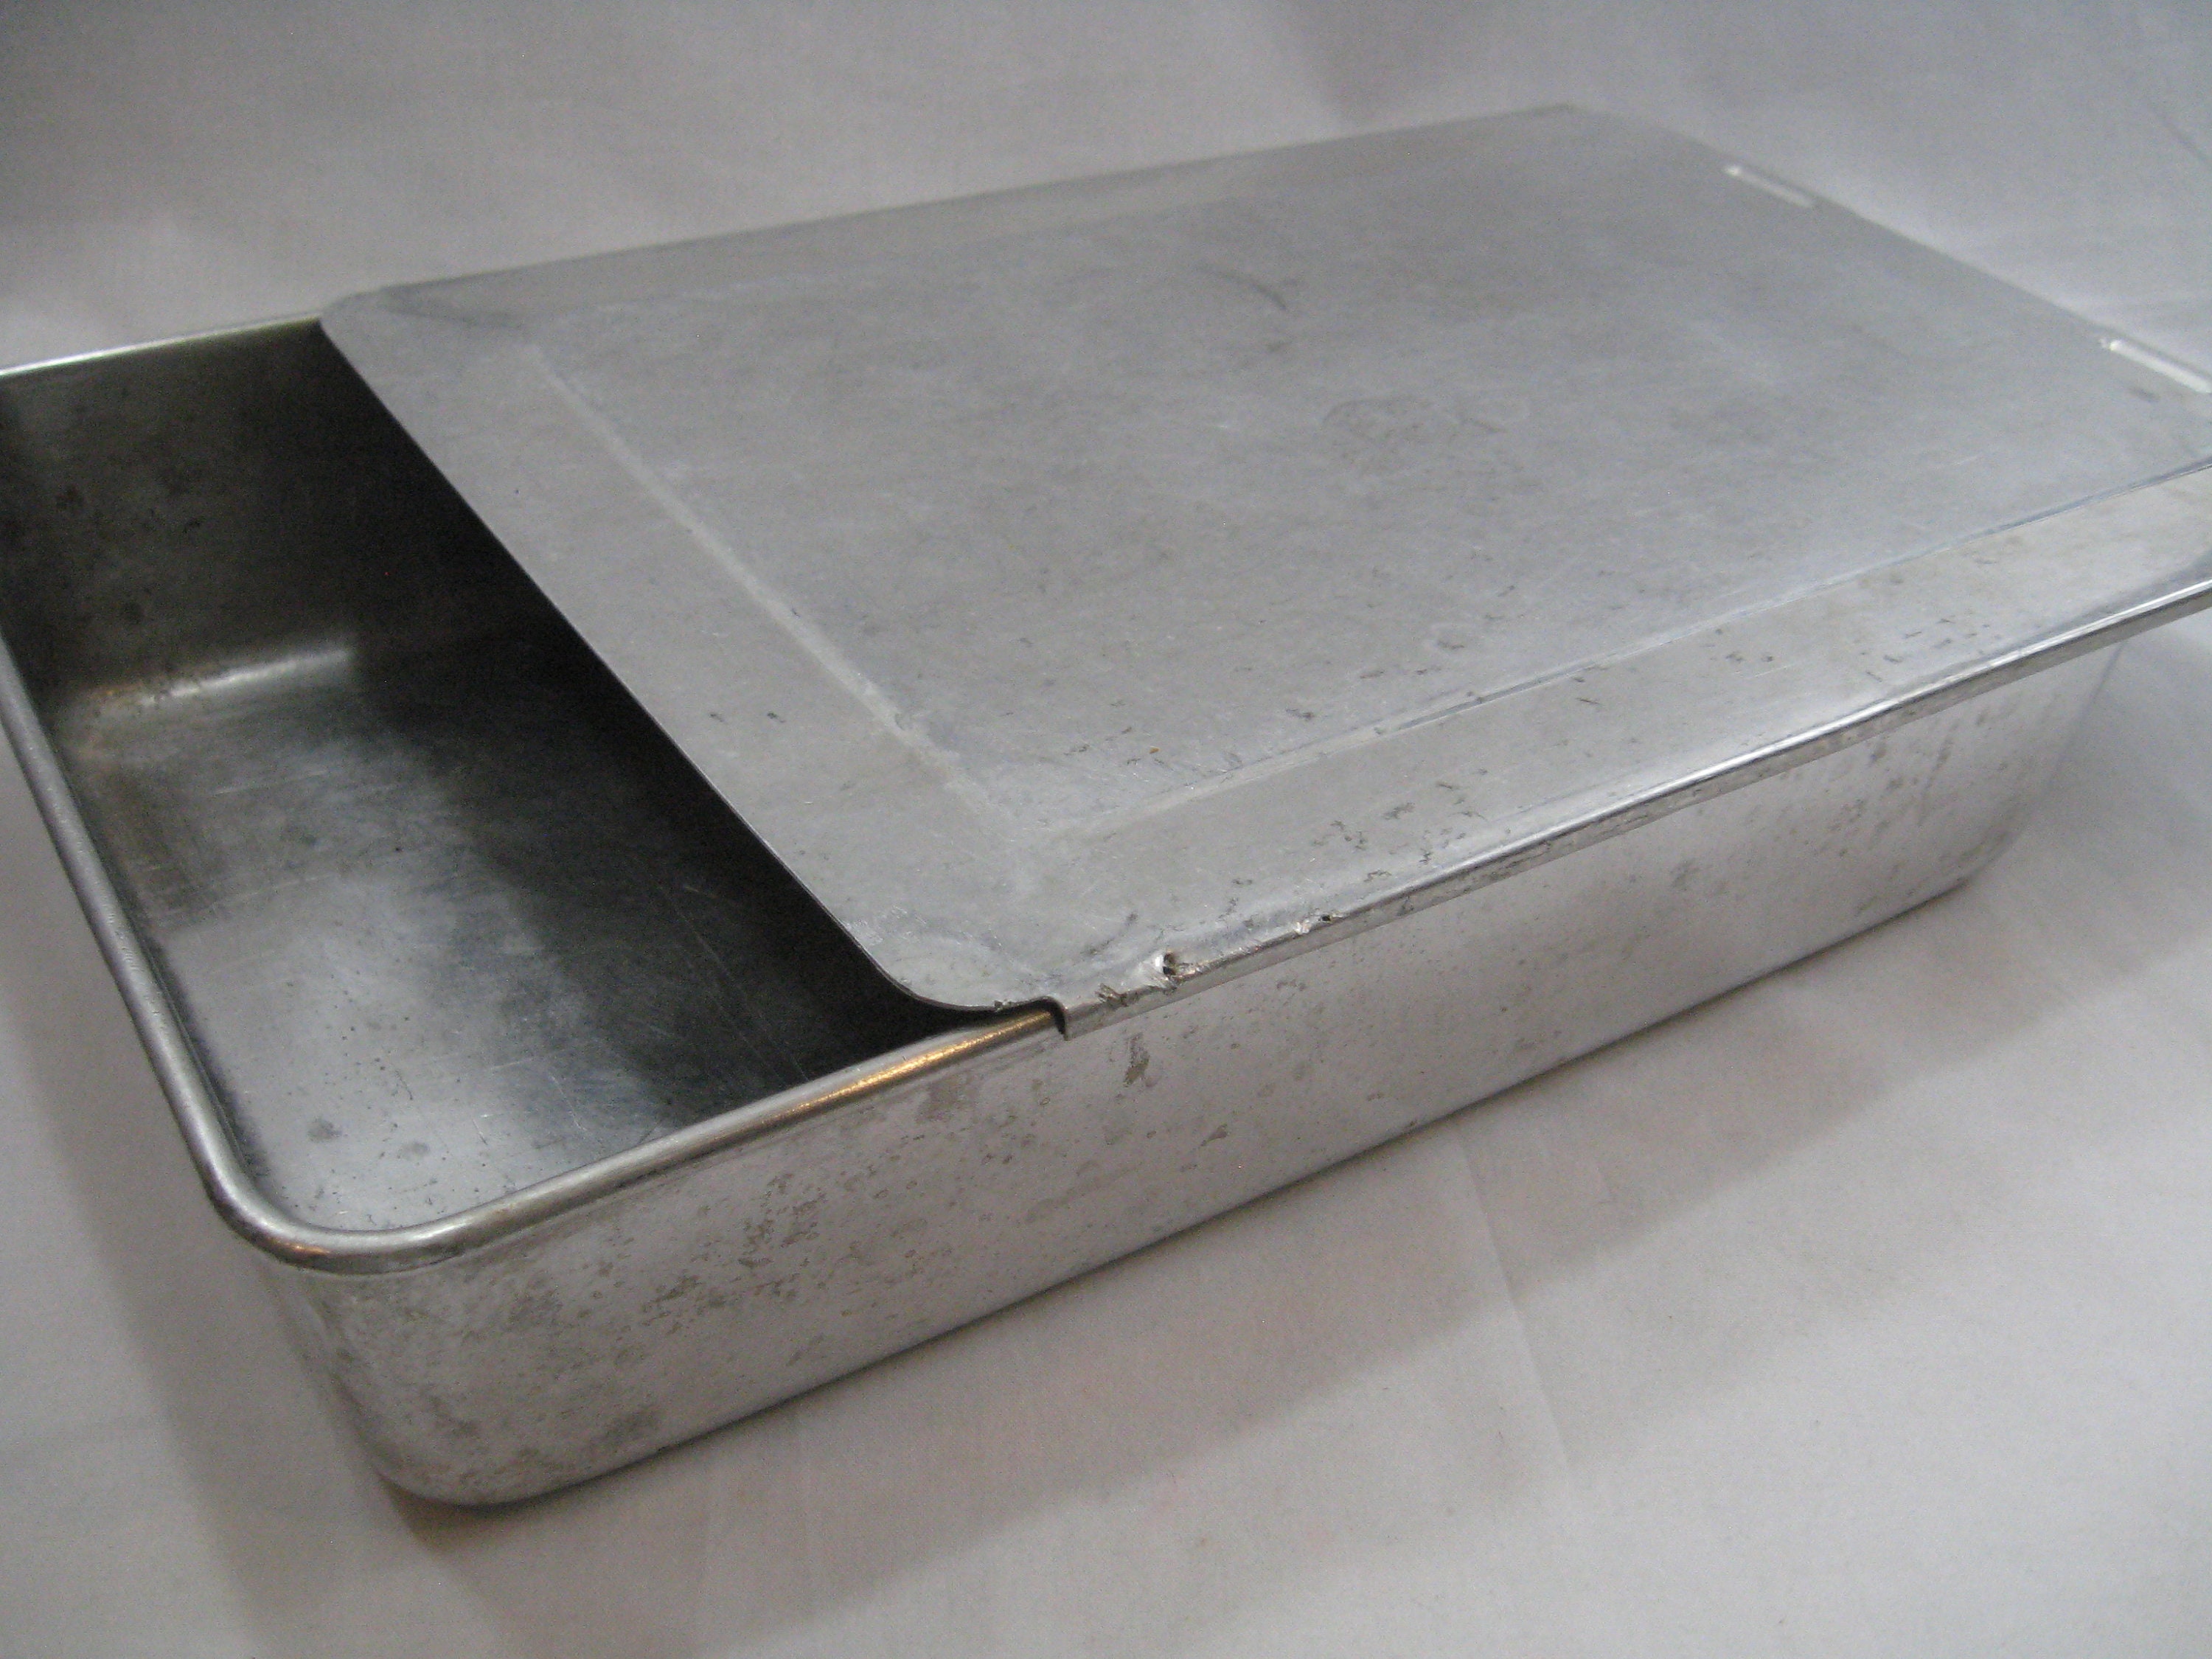 Vintage Mirro 13x 9x 2 5/8 Aluminum Cake Baking Pan with Lid